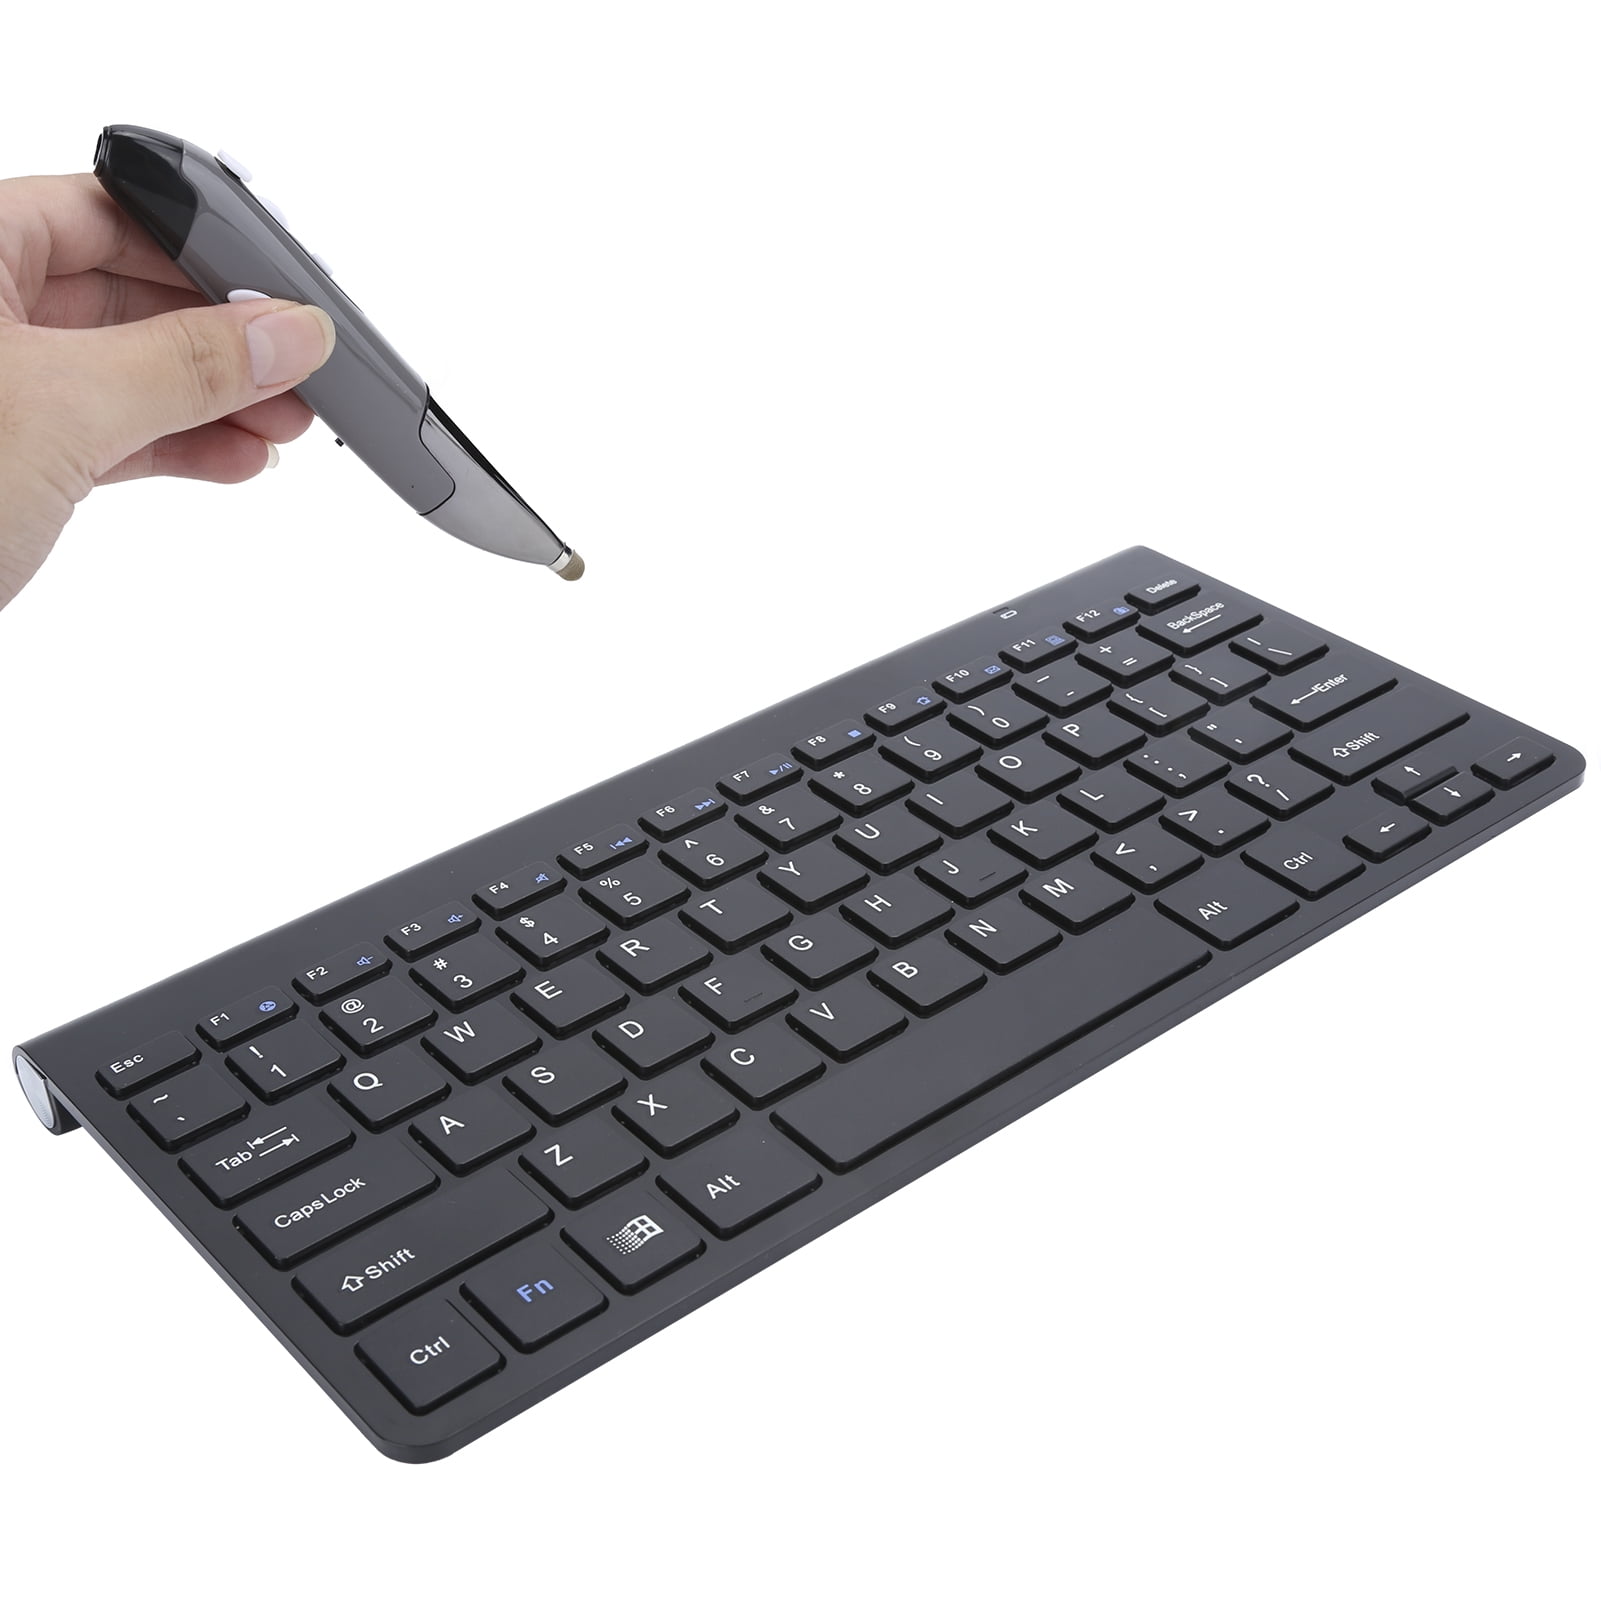 KM909 2.4GHz Pocket Pen Mouse Slim Ergonomic Design Optical Wireless Handwriting Mice for Phone Laptop